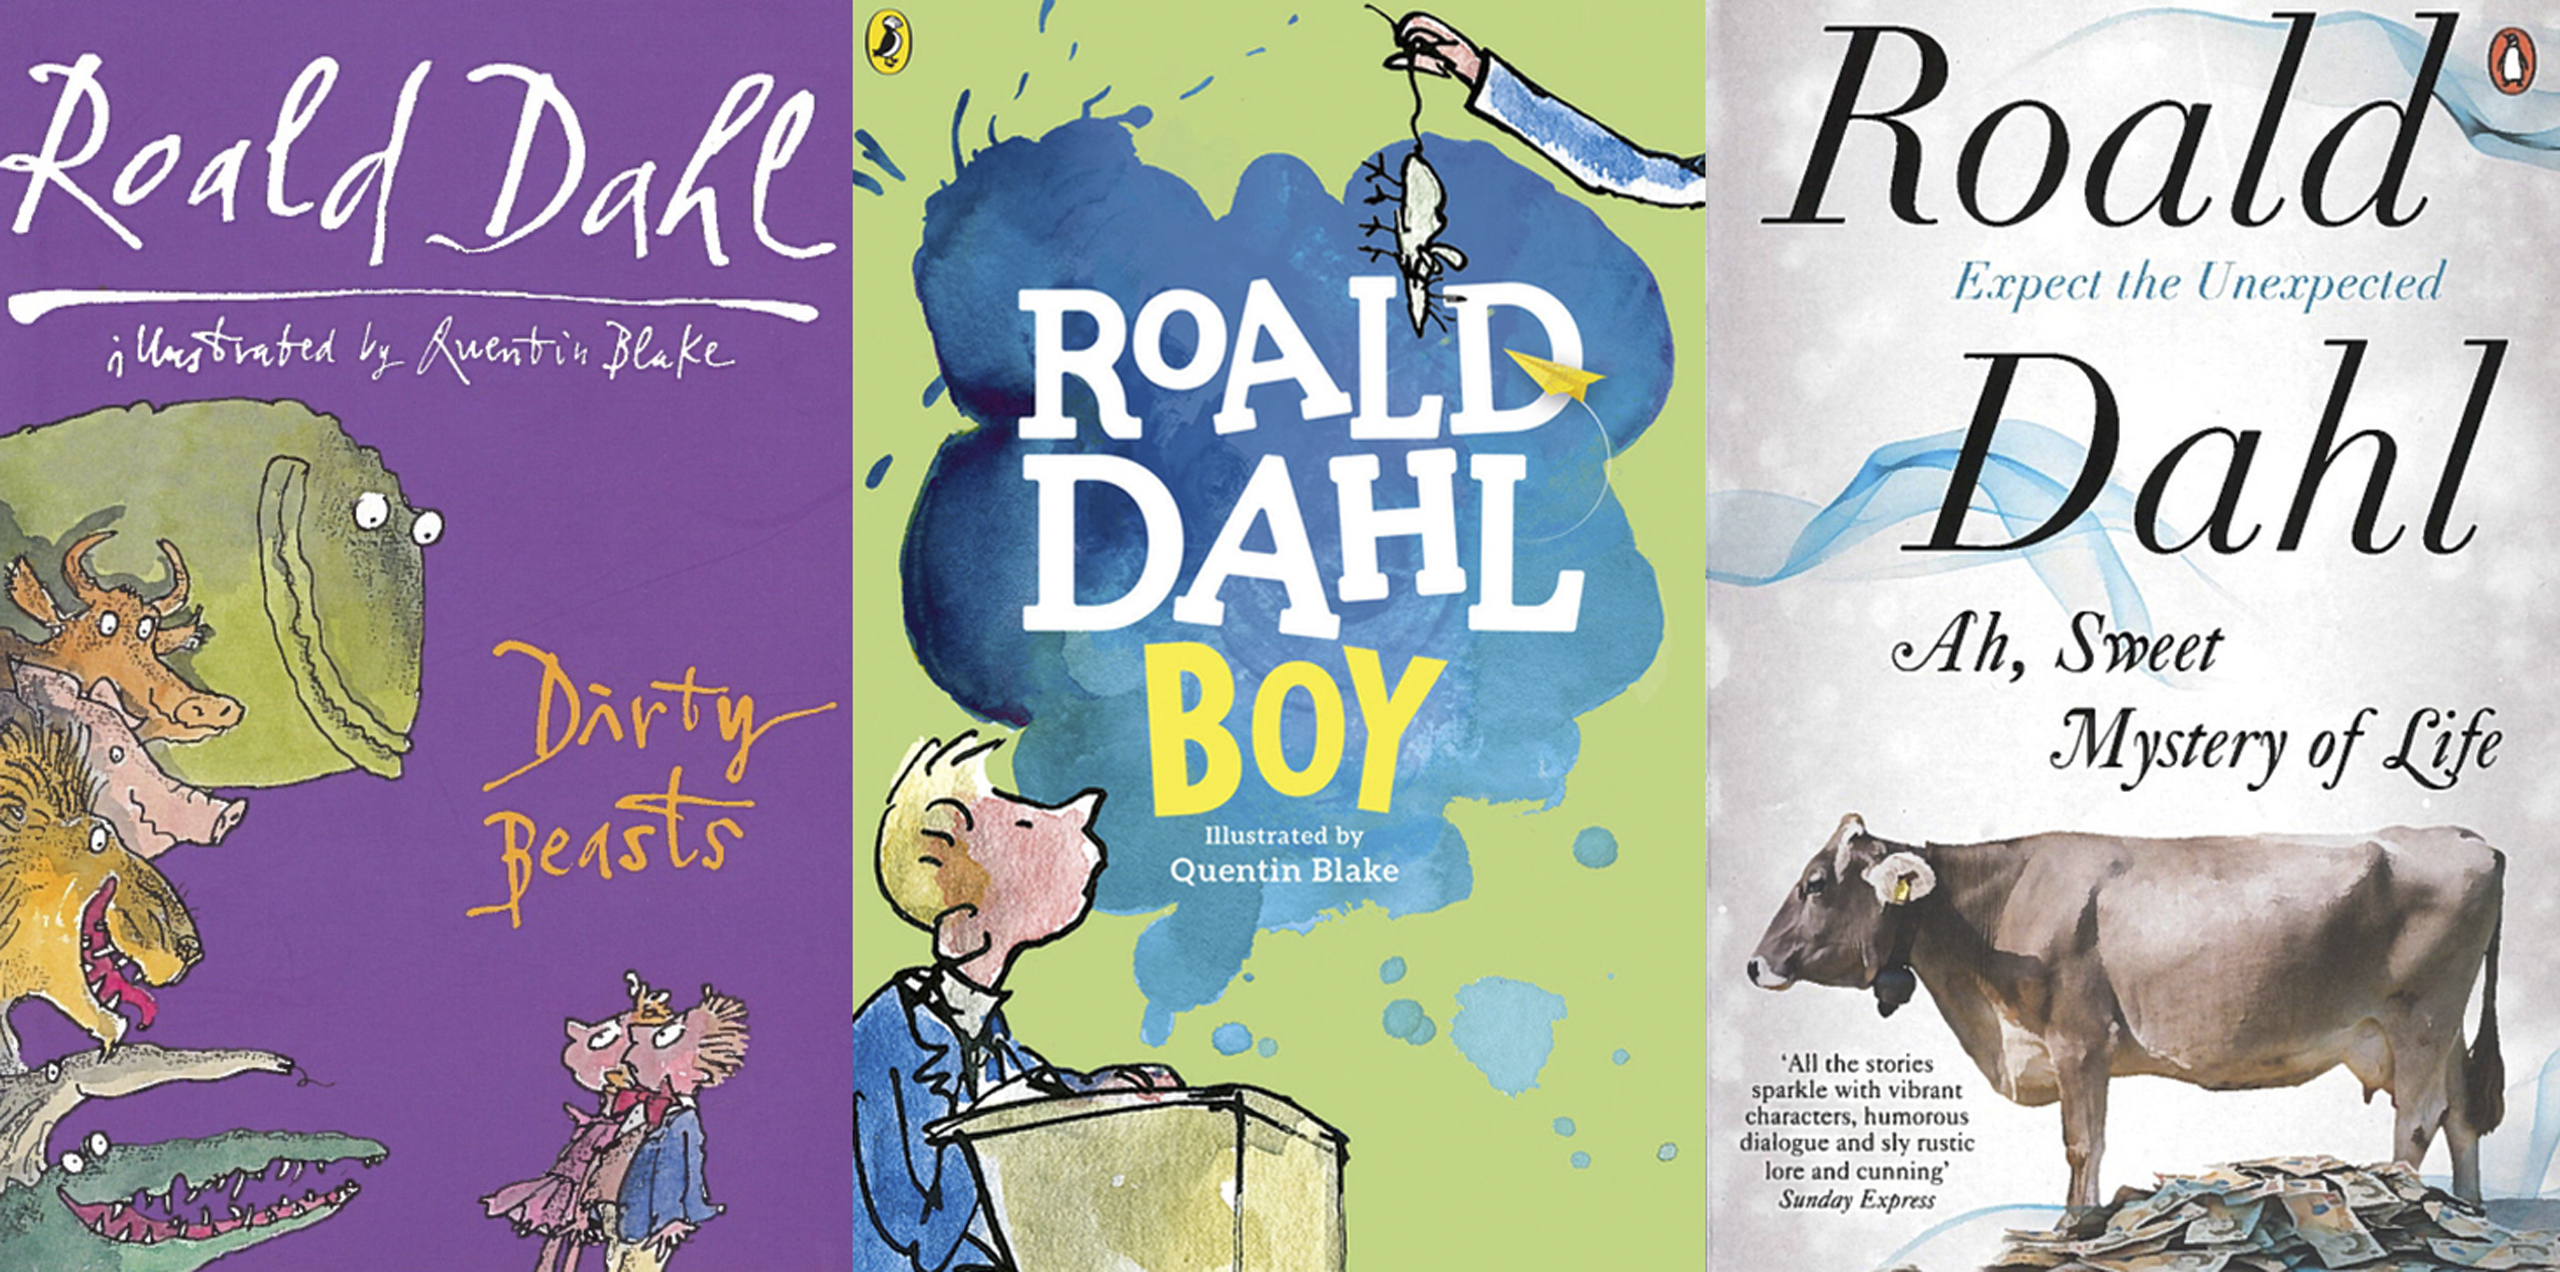 Roald Dahl books from left, Dirty Beasts, Boy, and Ah, Sweet Mystery of Life. (Roald Dahl)